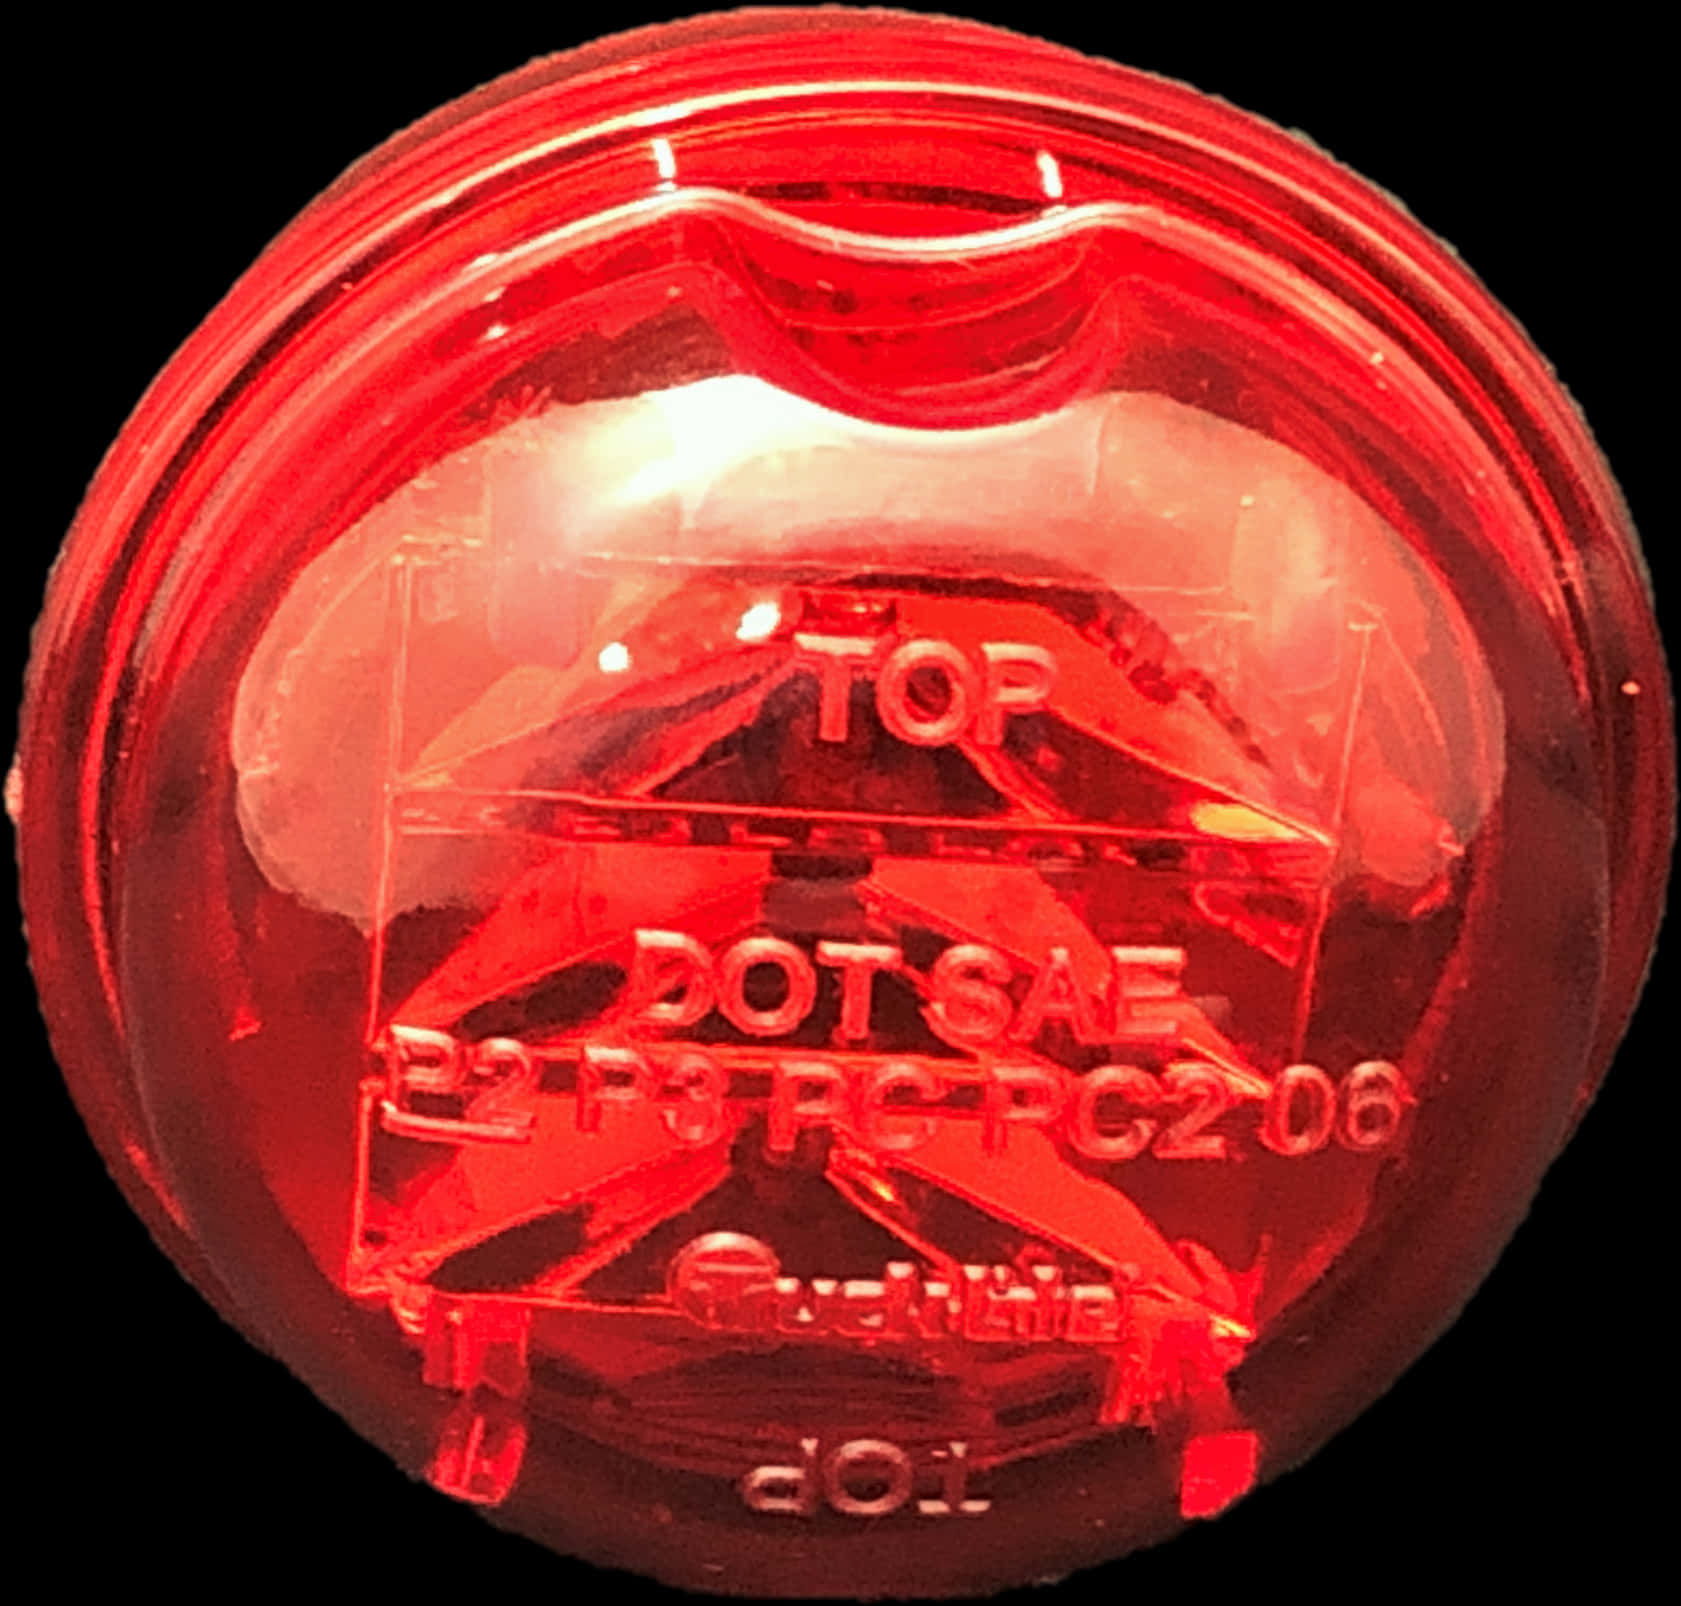 Illuminated Red Traffic Light Closeup.jpg